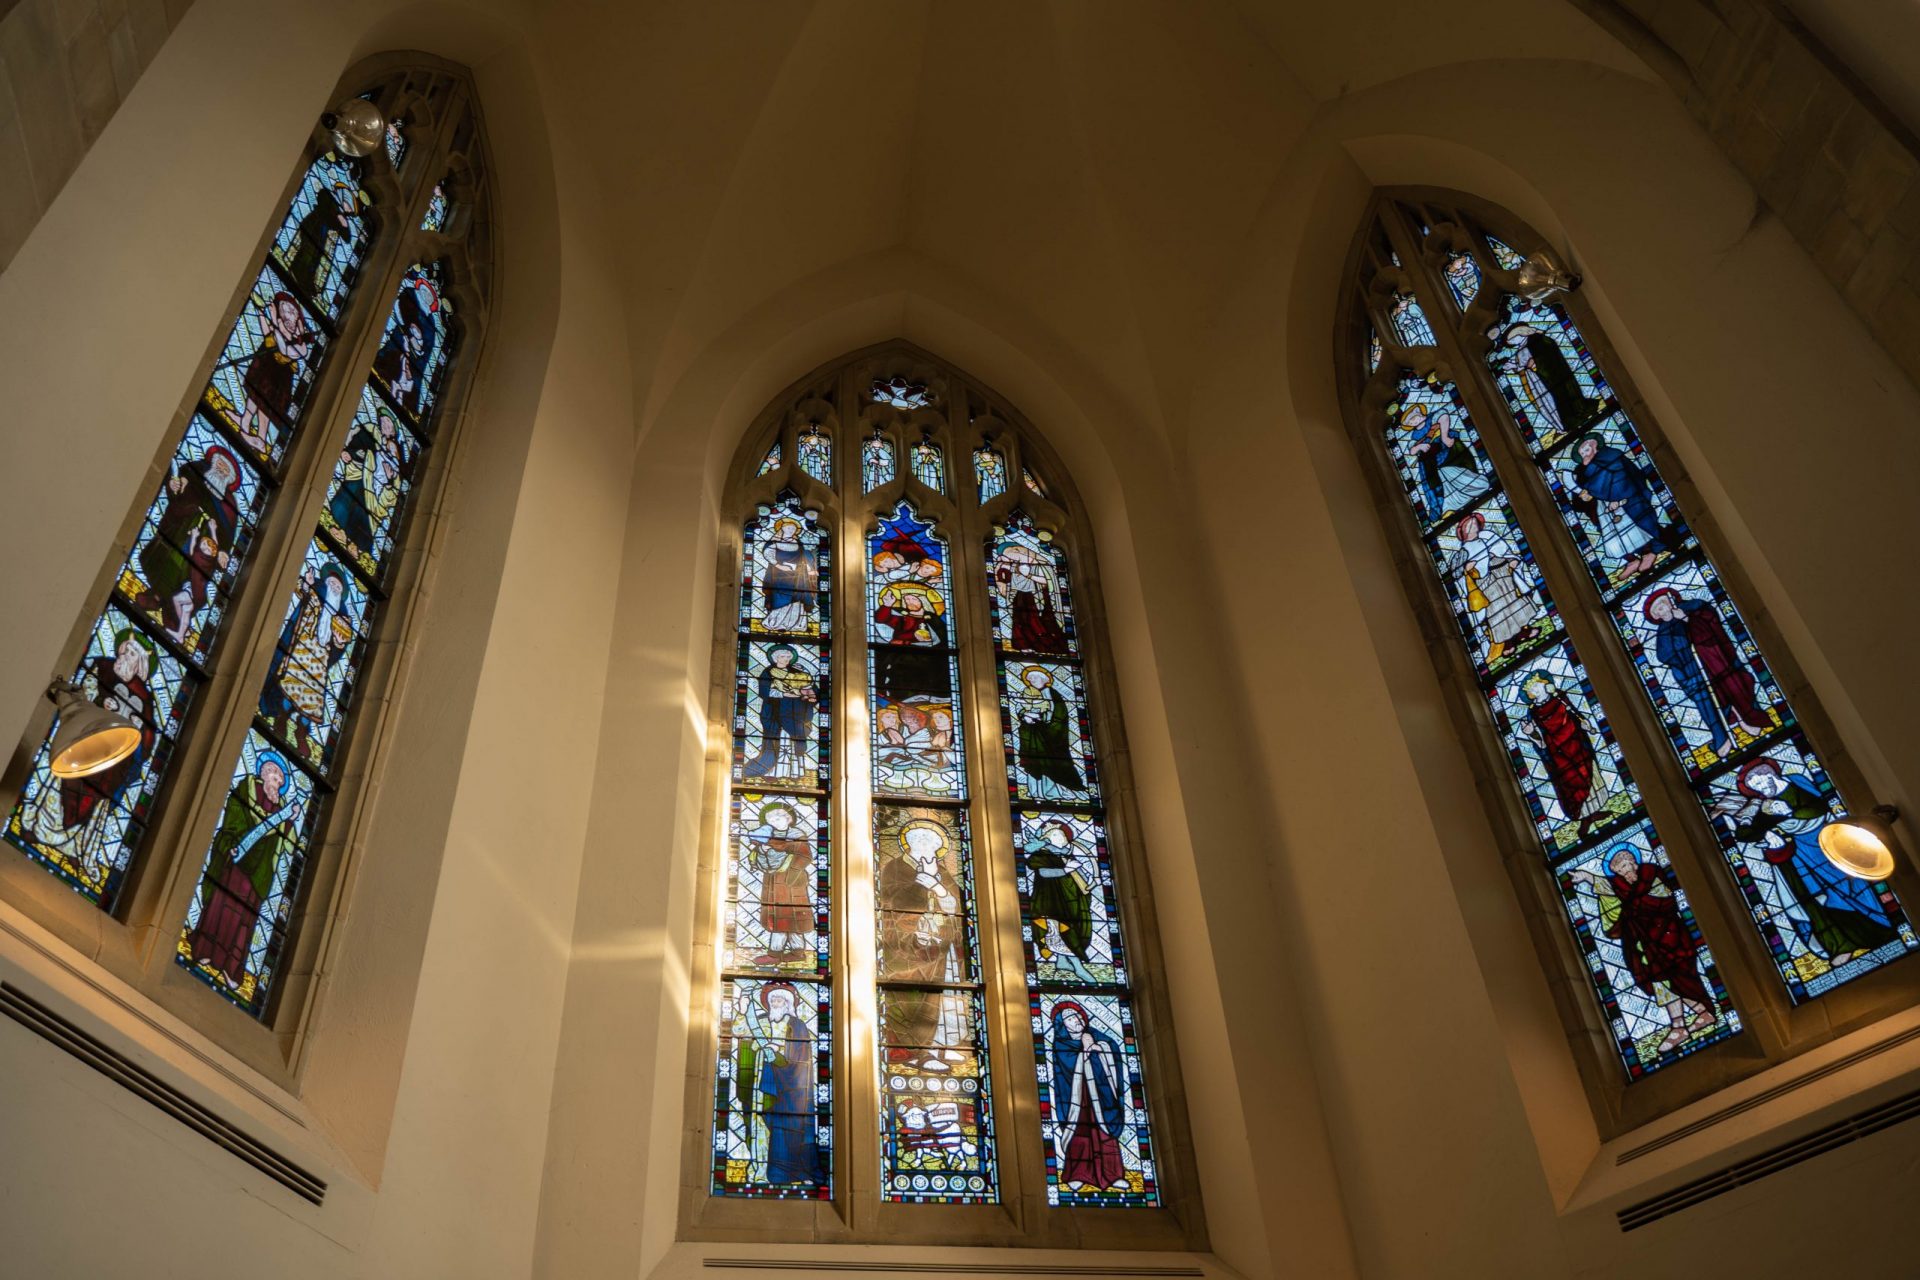 The Lady Chapel Windows